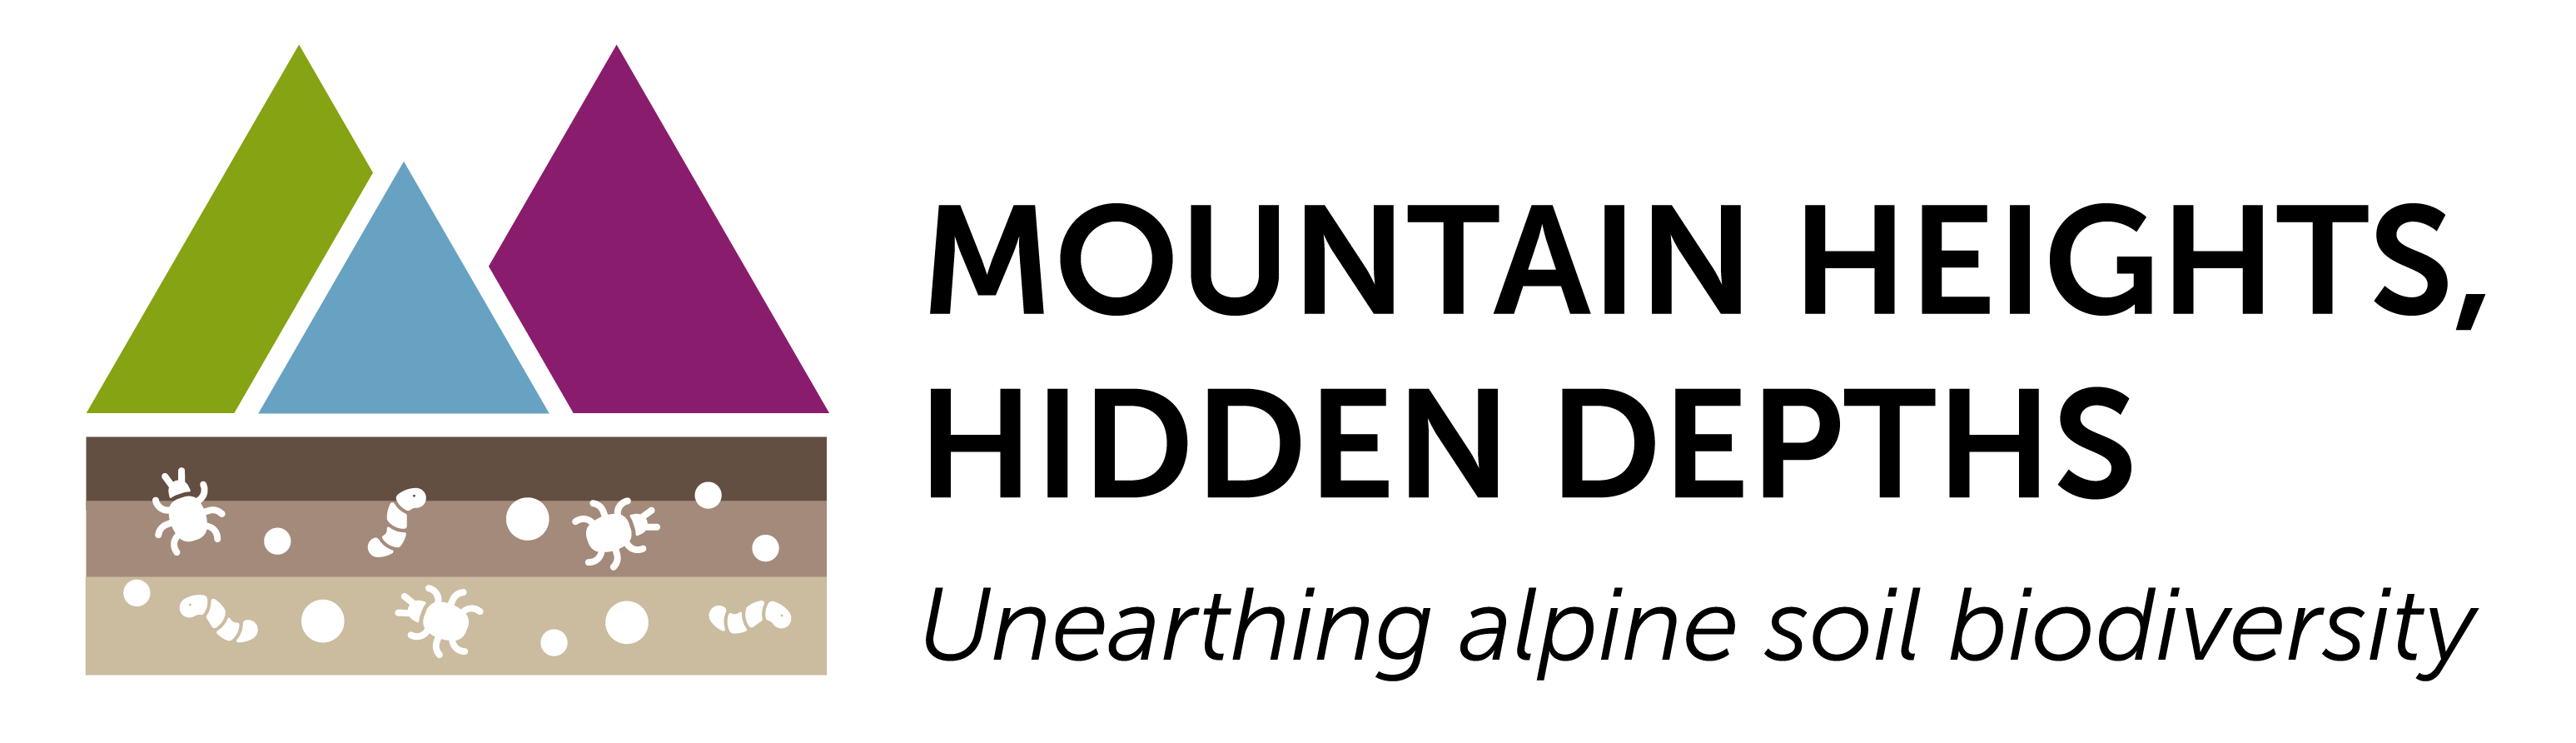 Mountain heights, hidden depths: unearthing alpine soil biodiversity